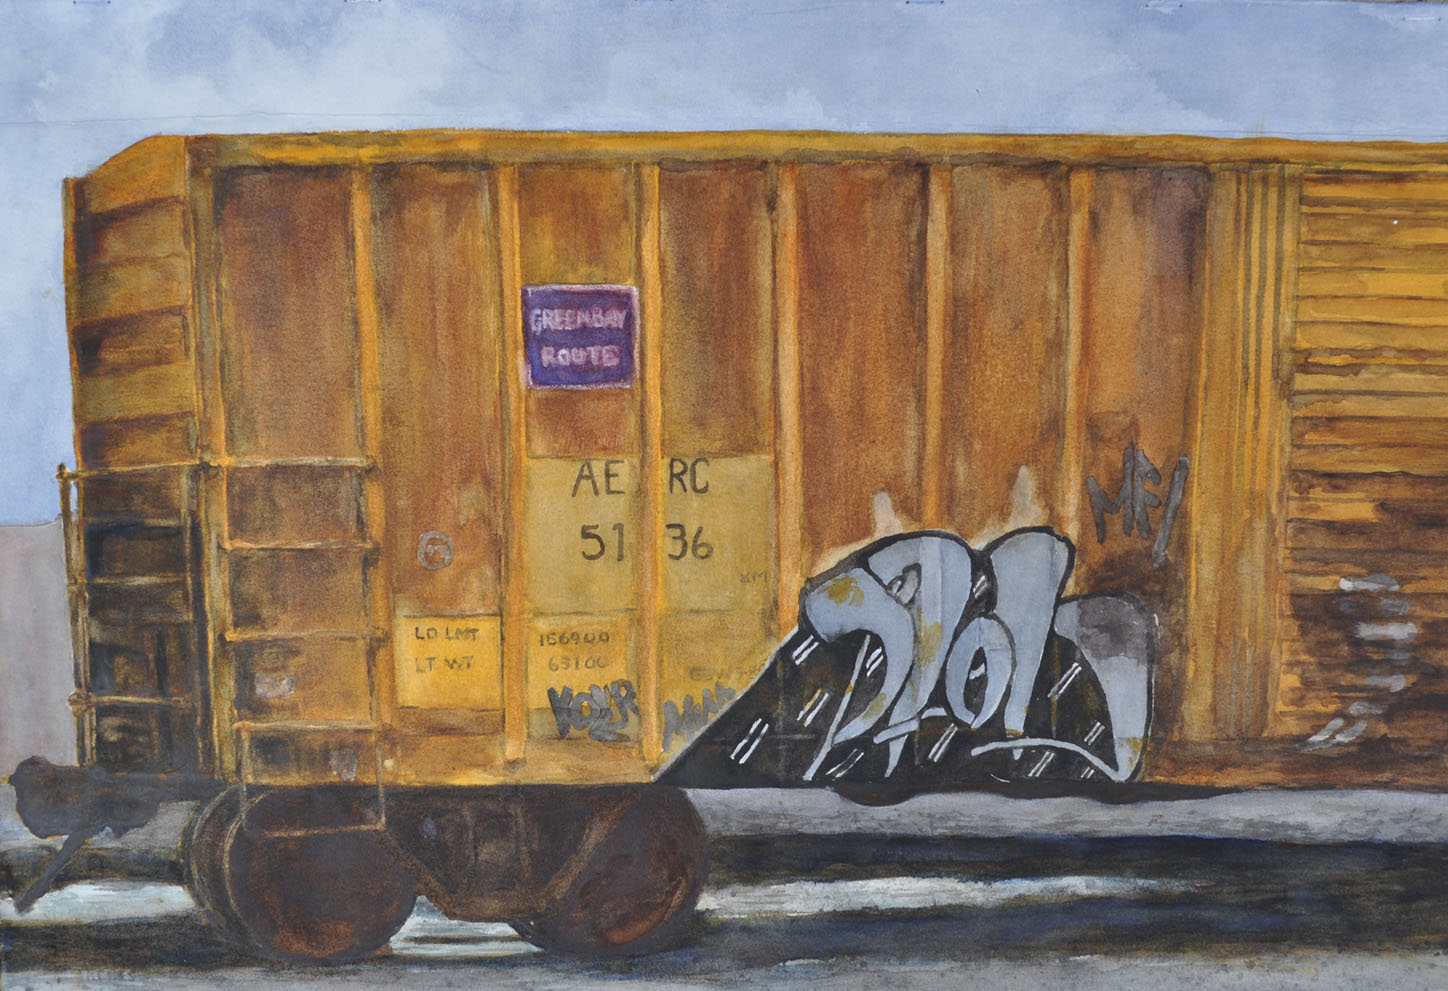 Yellow boxcar